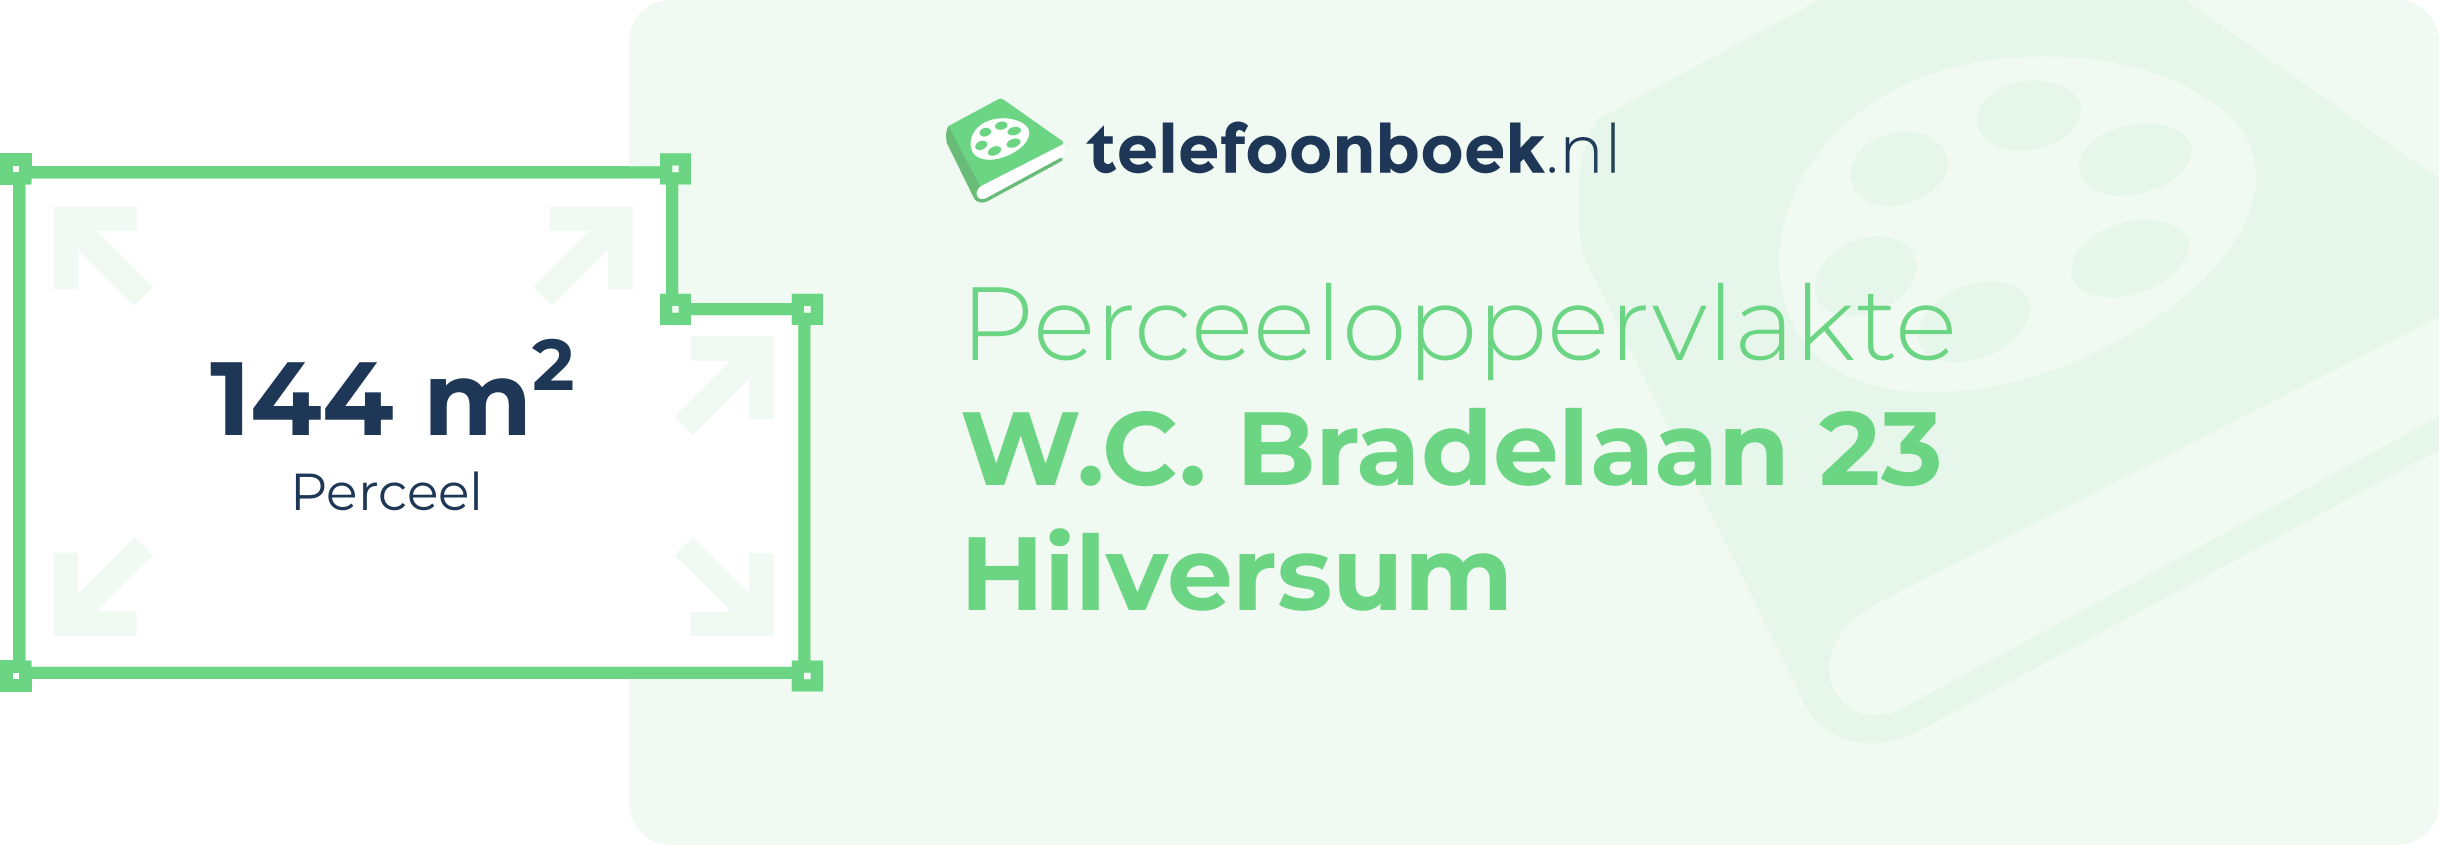 Perceeloppervlakte W.C. Bradelaan 23 Hilversum